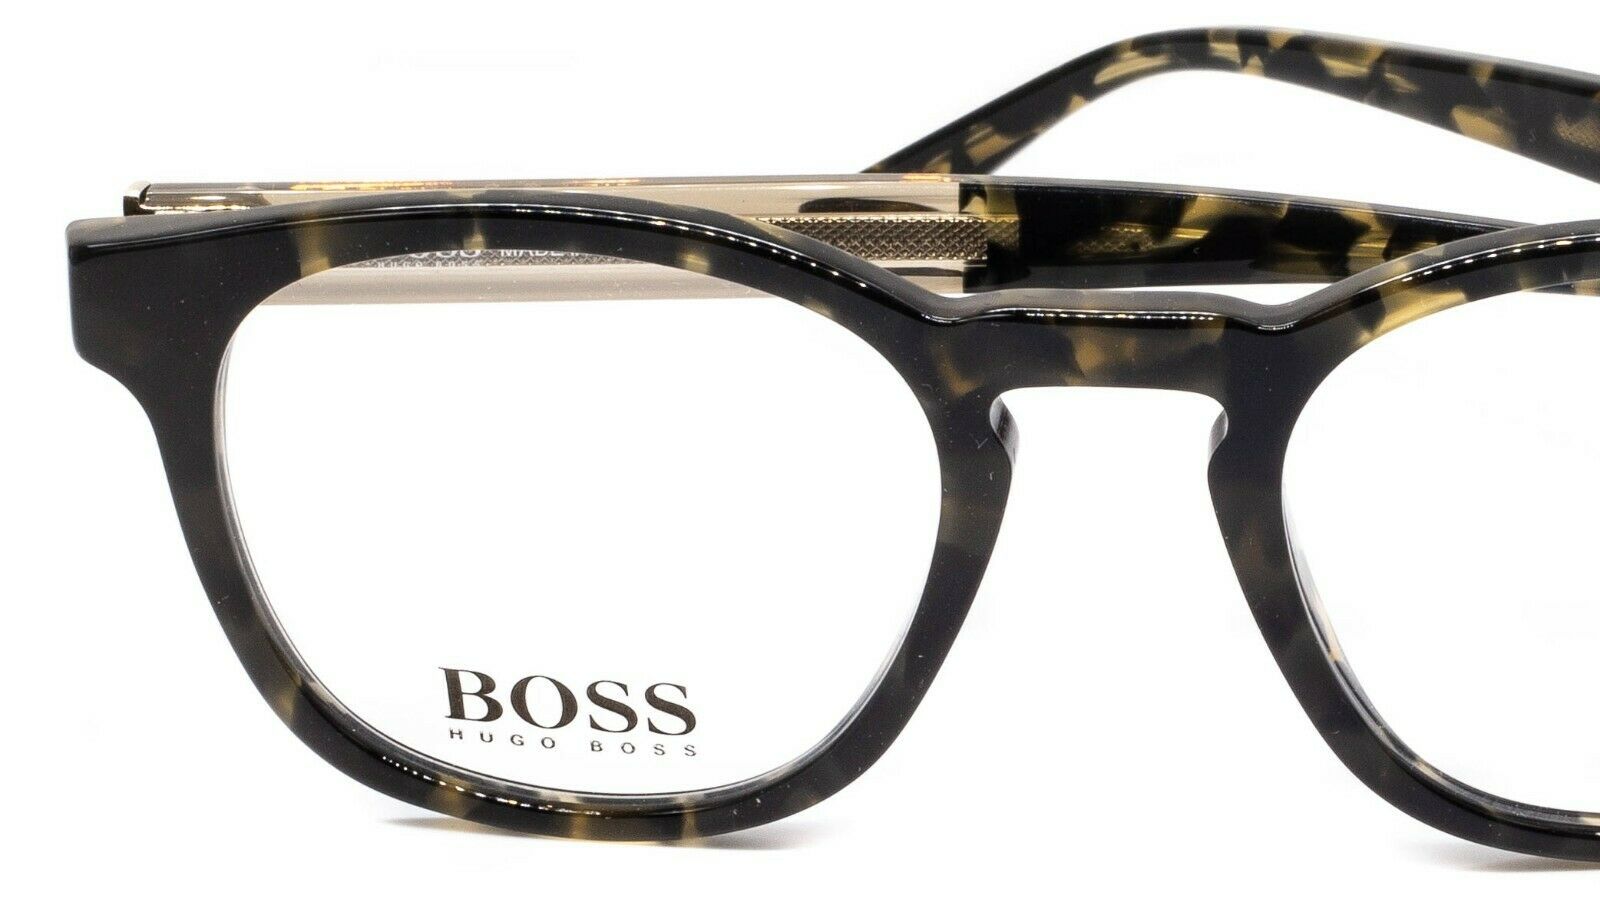 HUGO BOSS 0804 UHY 49mm Eyewear FRAMES Glasses RX Optical Eyeglasses New - Italy